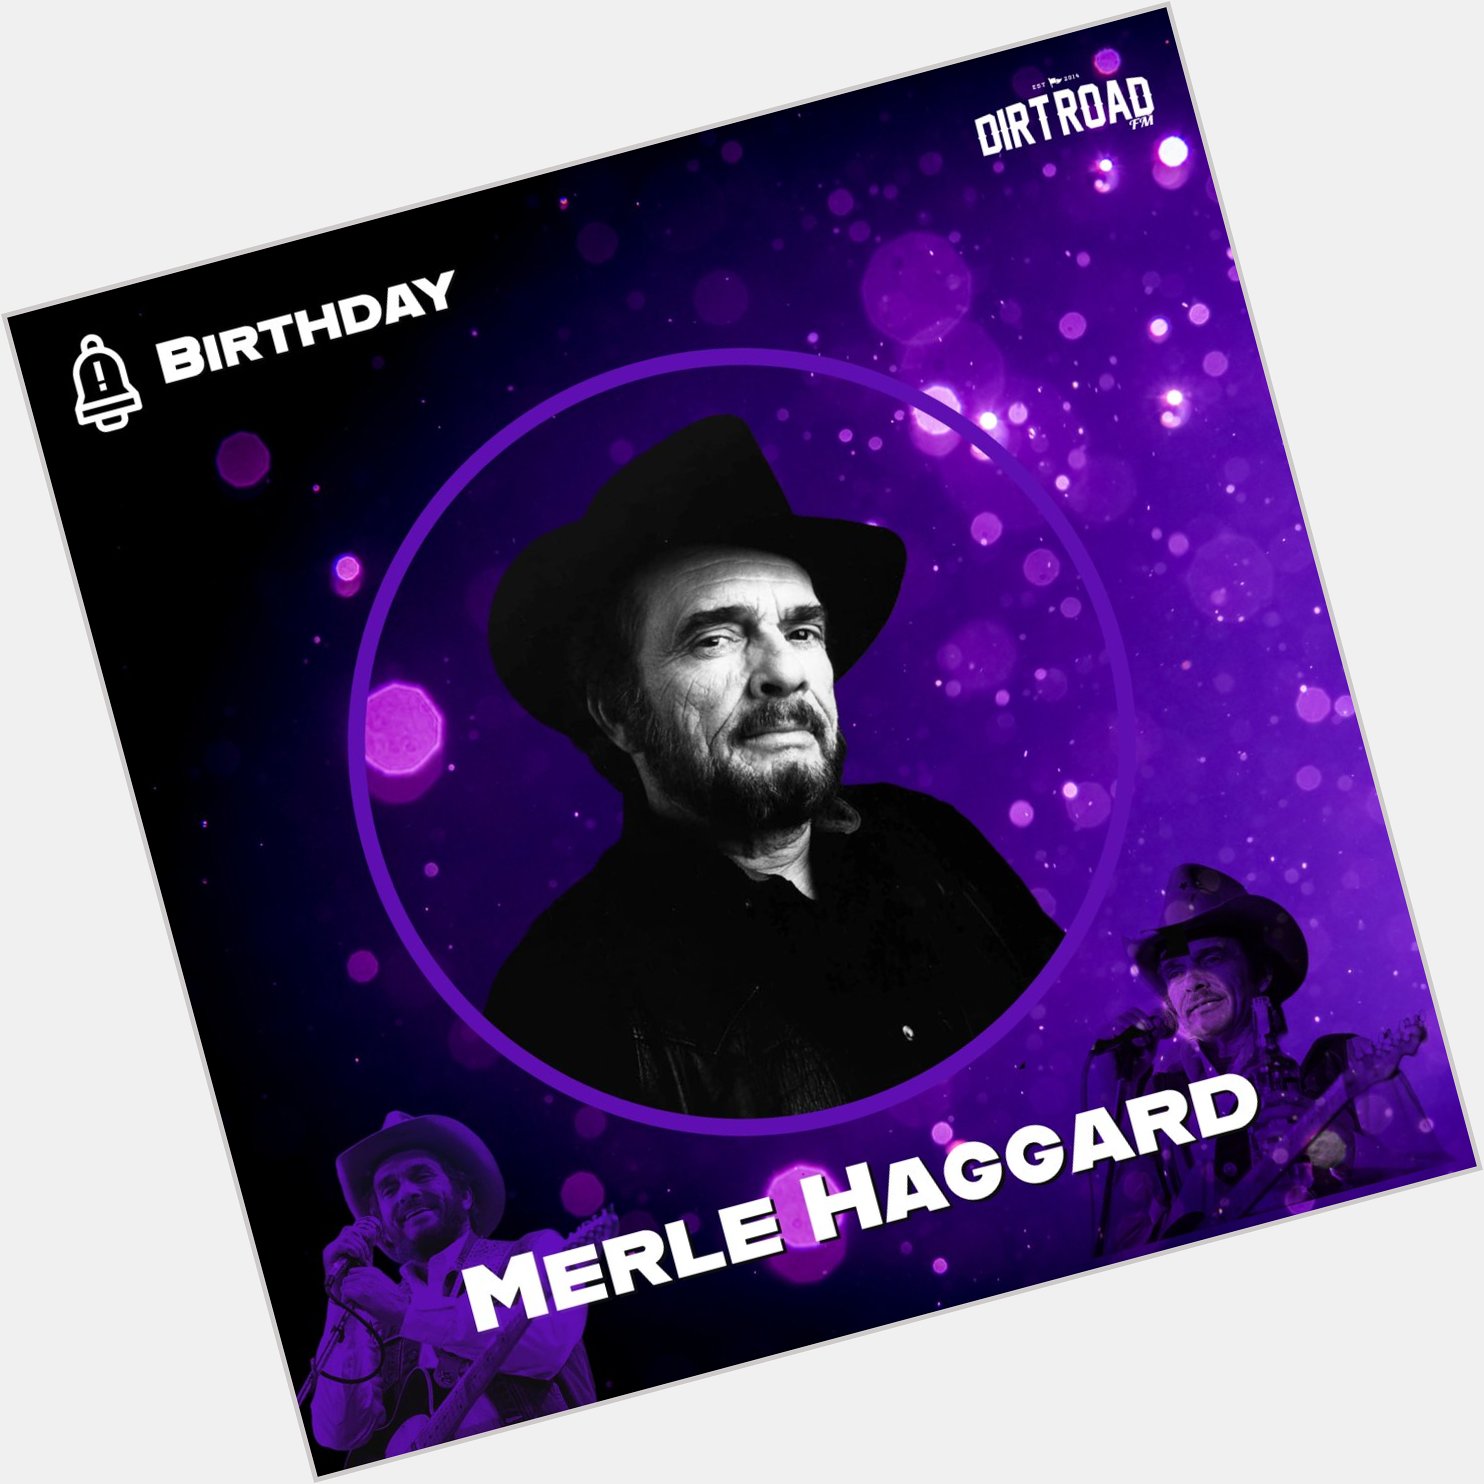 Happy Late Birthday to Merle Haggard. 